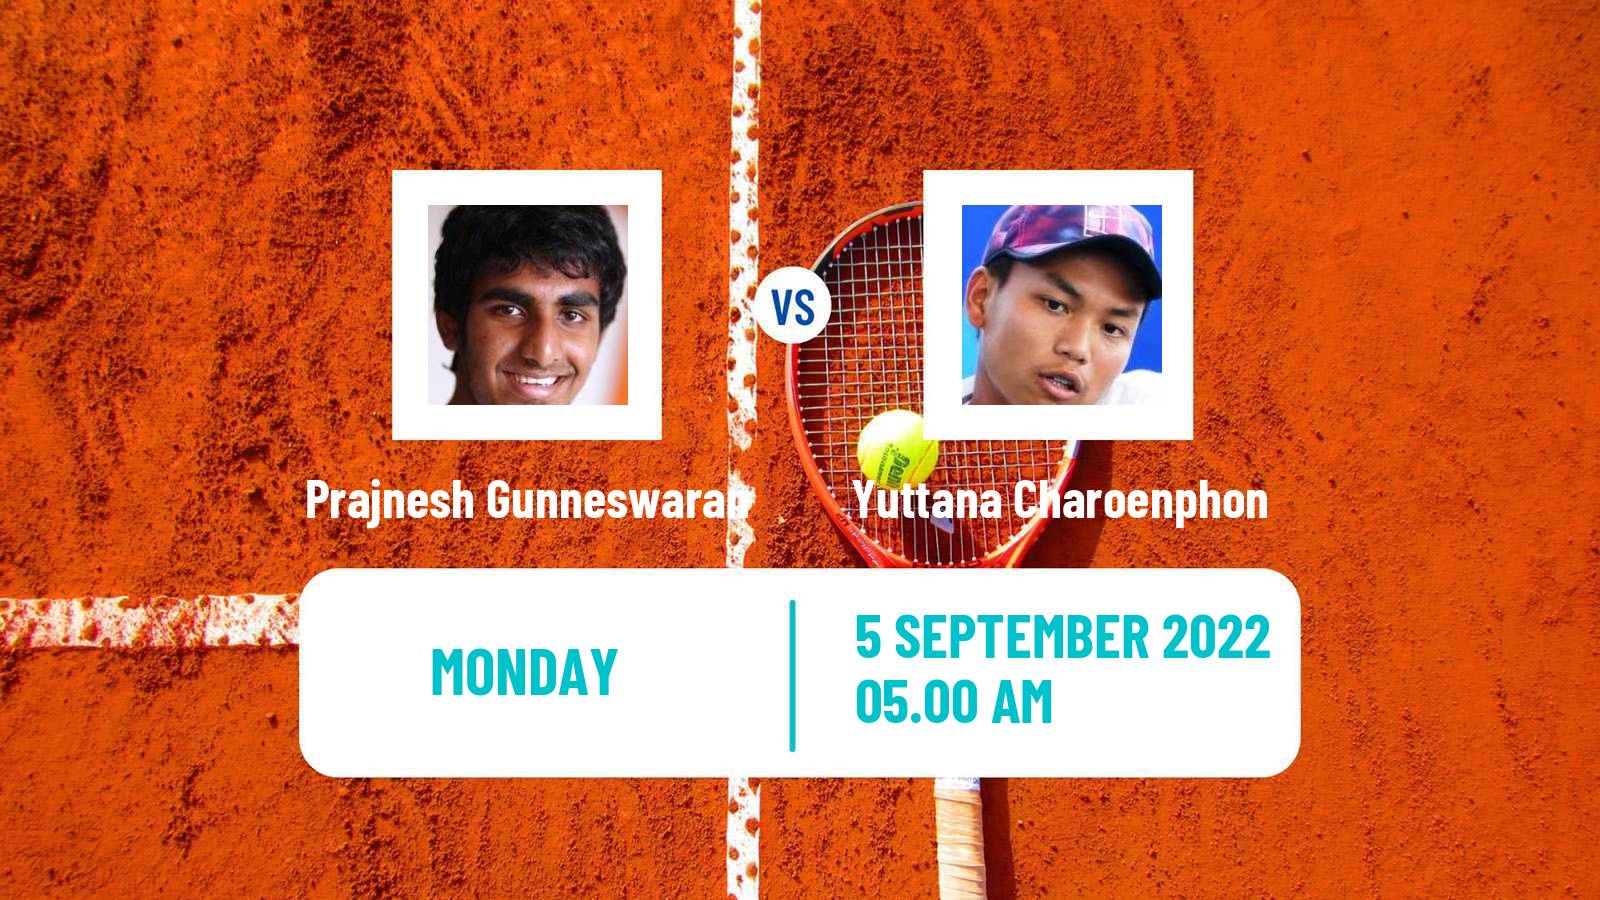 Tennis ATP Challenger Prajnesh Gunneswaran - Yuttana Charoenphon